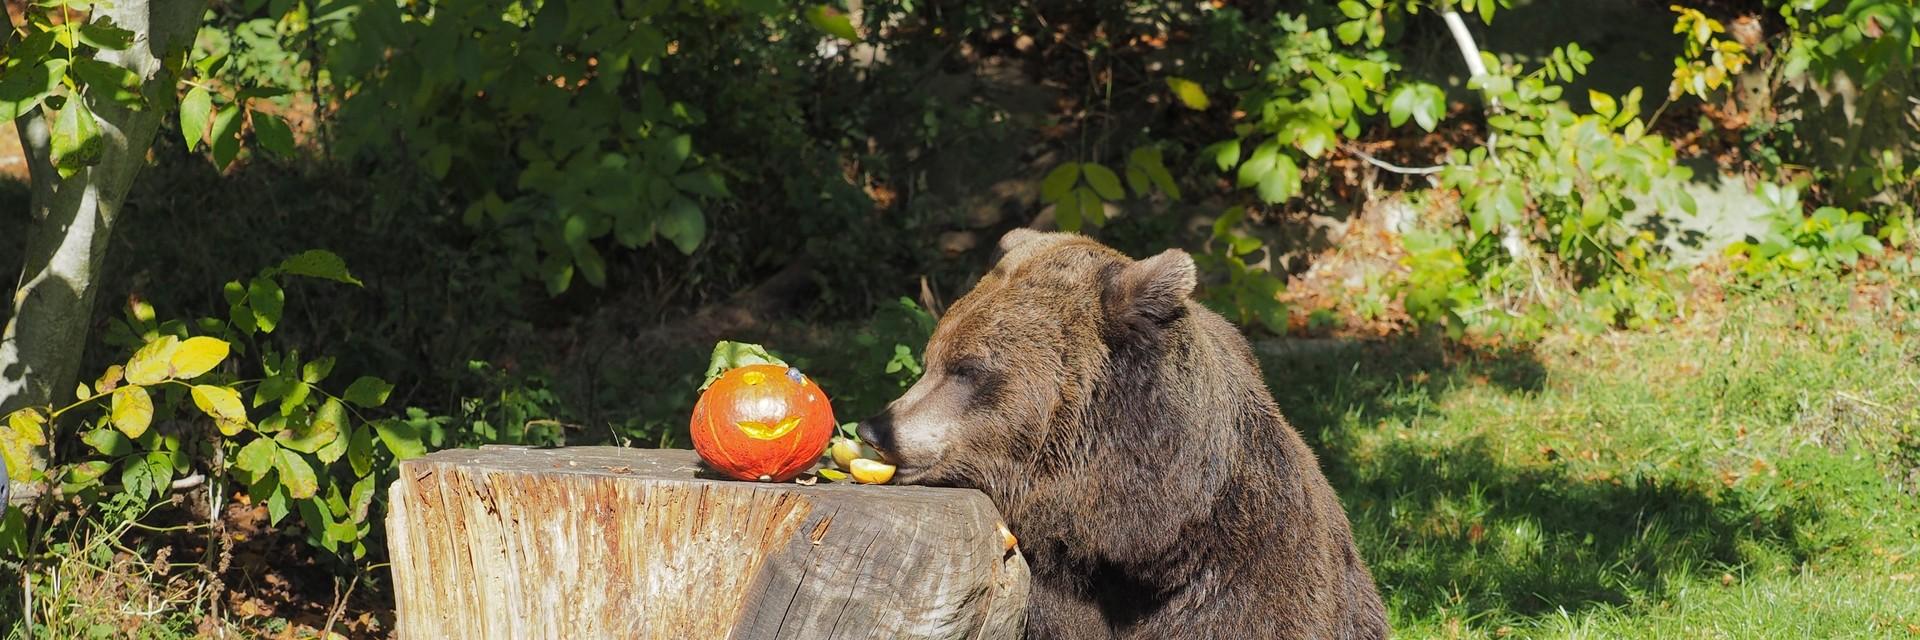 Bear Emma has found a pumpkin filled with treats